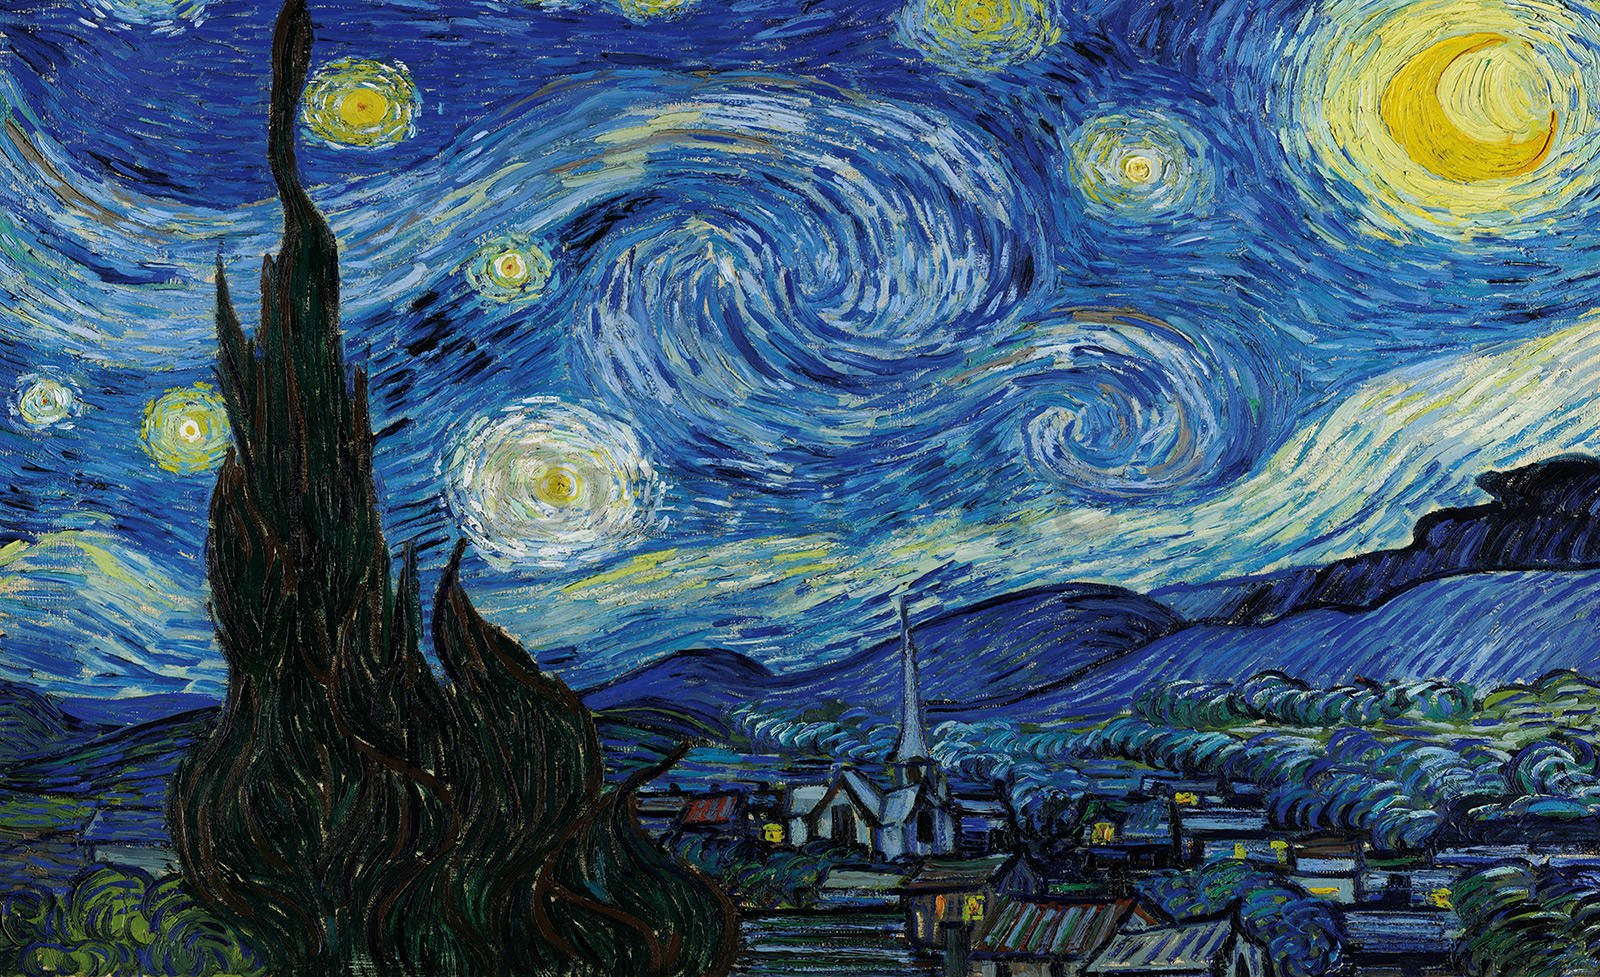 Fotomurale in TNT: Vincent Van Gogh, Notte stellata - 104x70,5cm